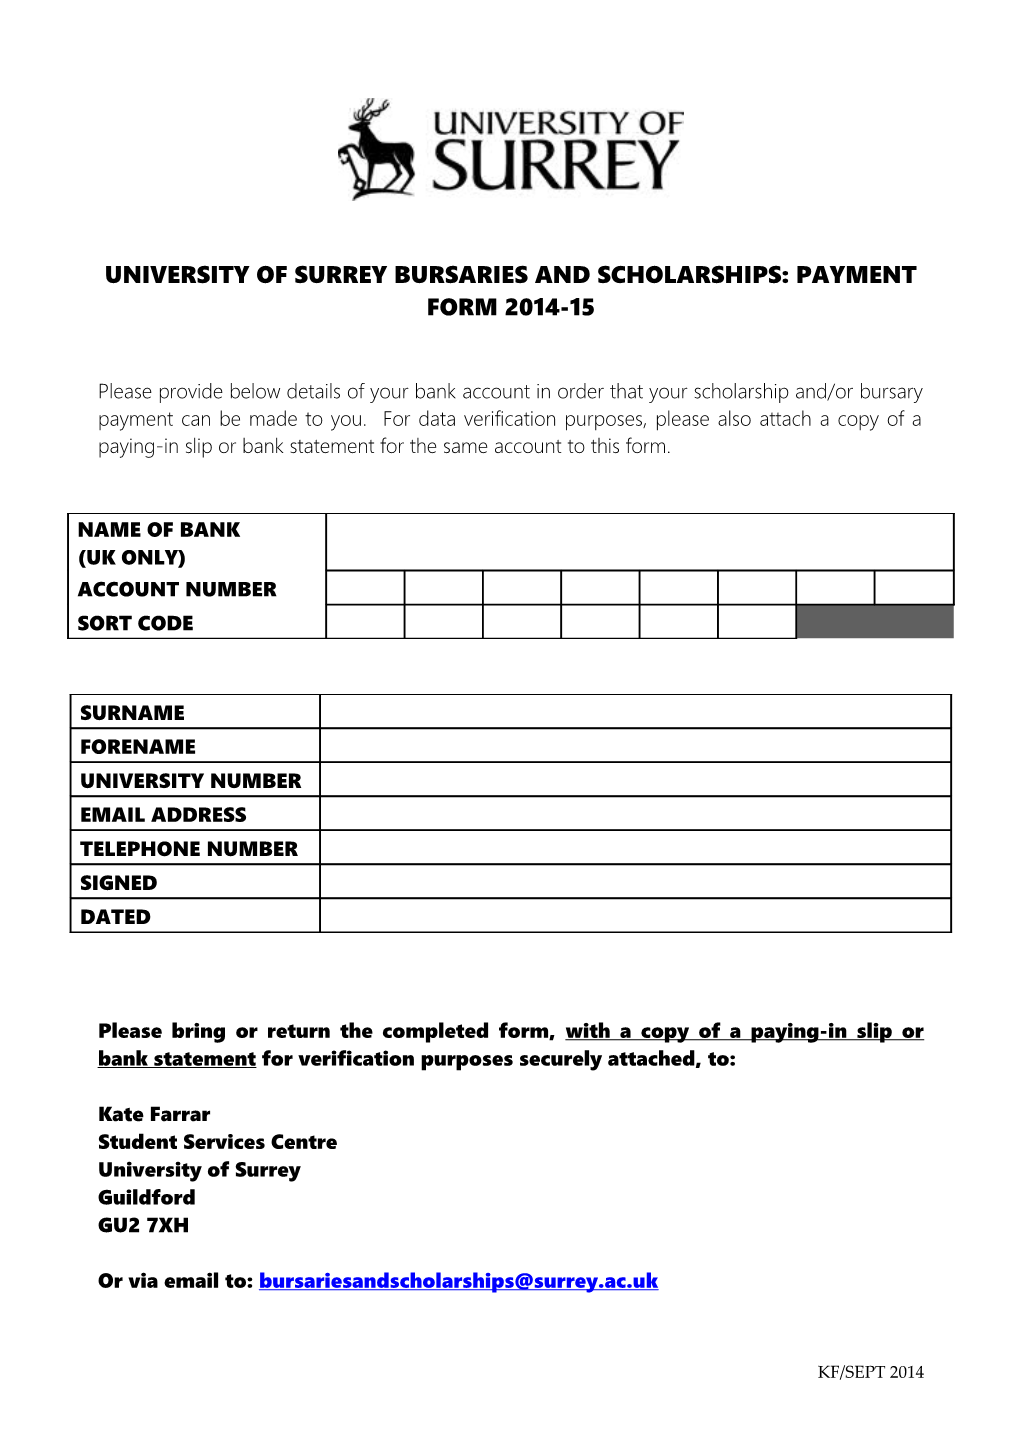 University of Surrey Bursaries and Scholarships: Payment Form 2014-15